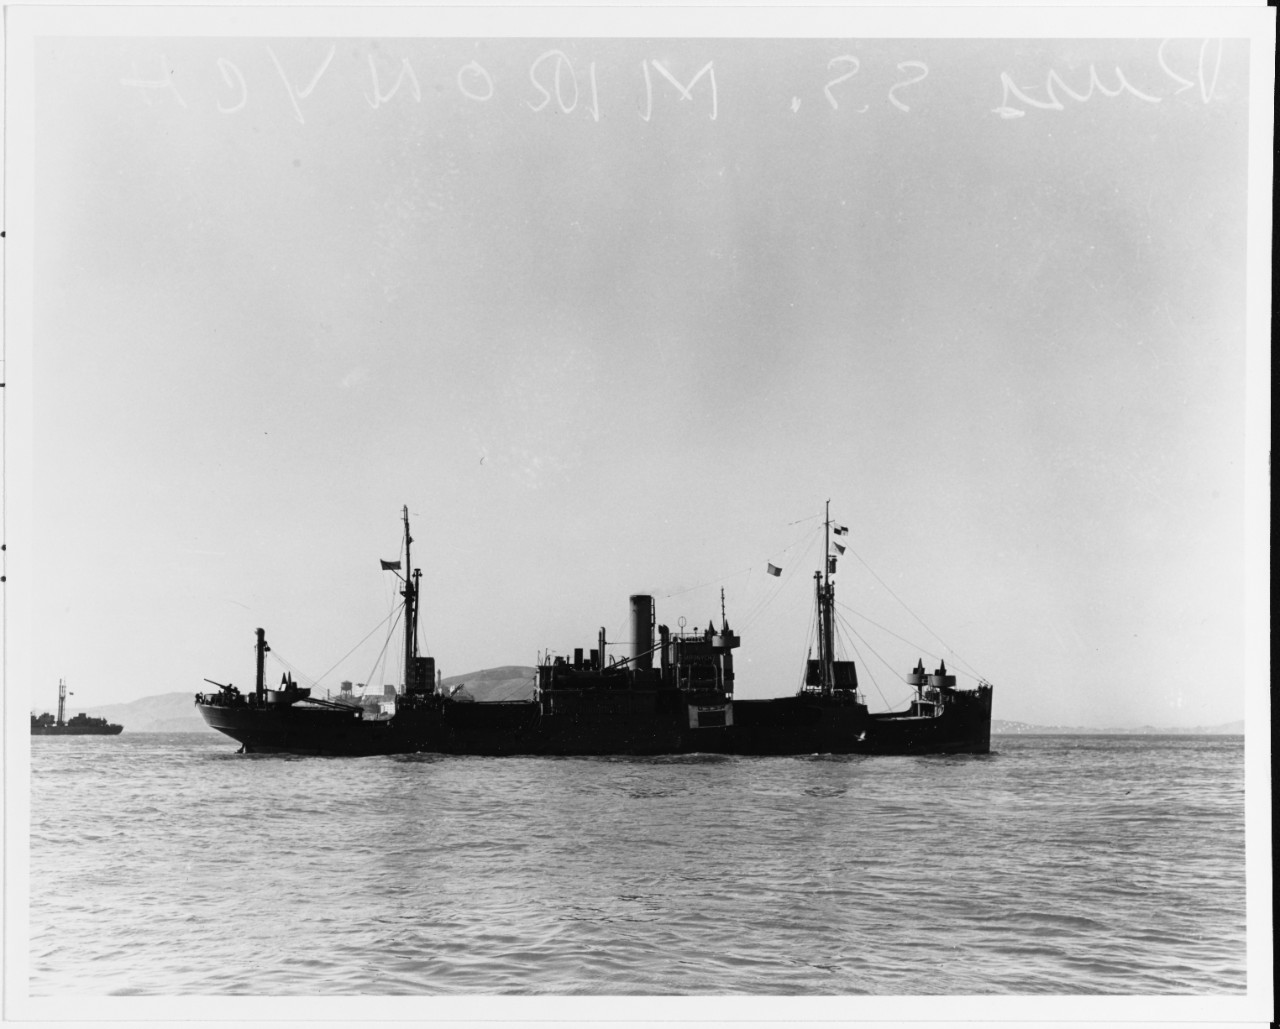 S.S. MIRONYCH (U.S.S.R. Merchant Cargo Ship, 1927-1967)